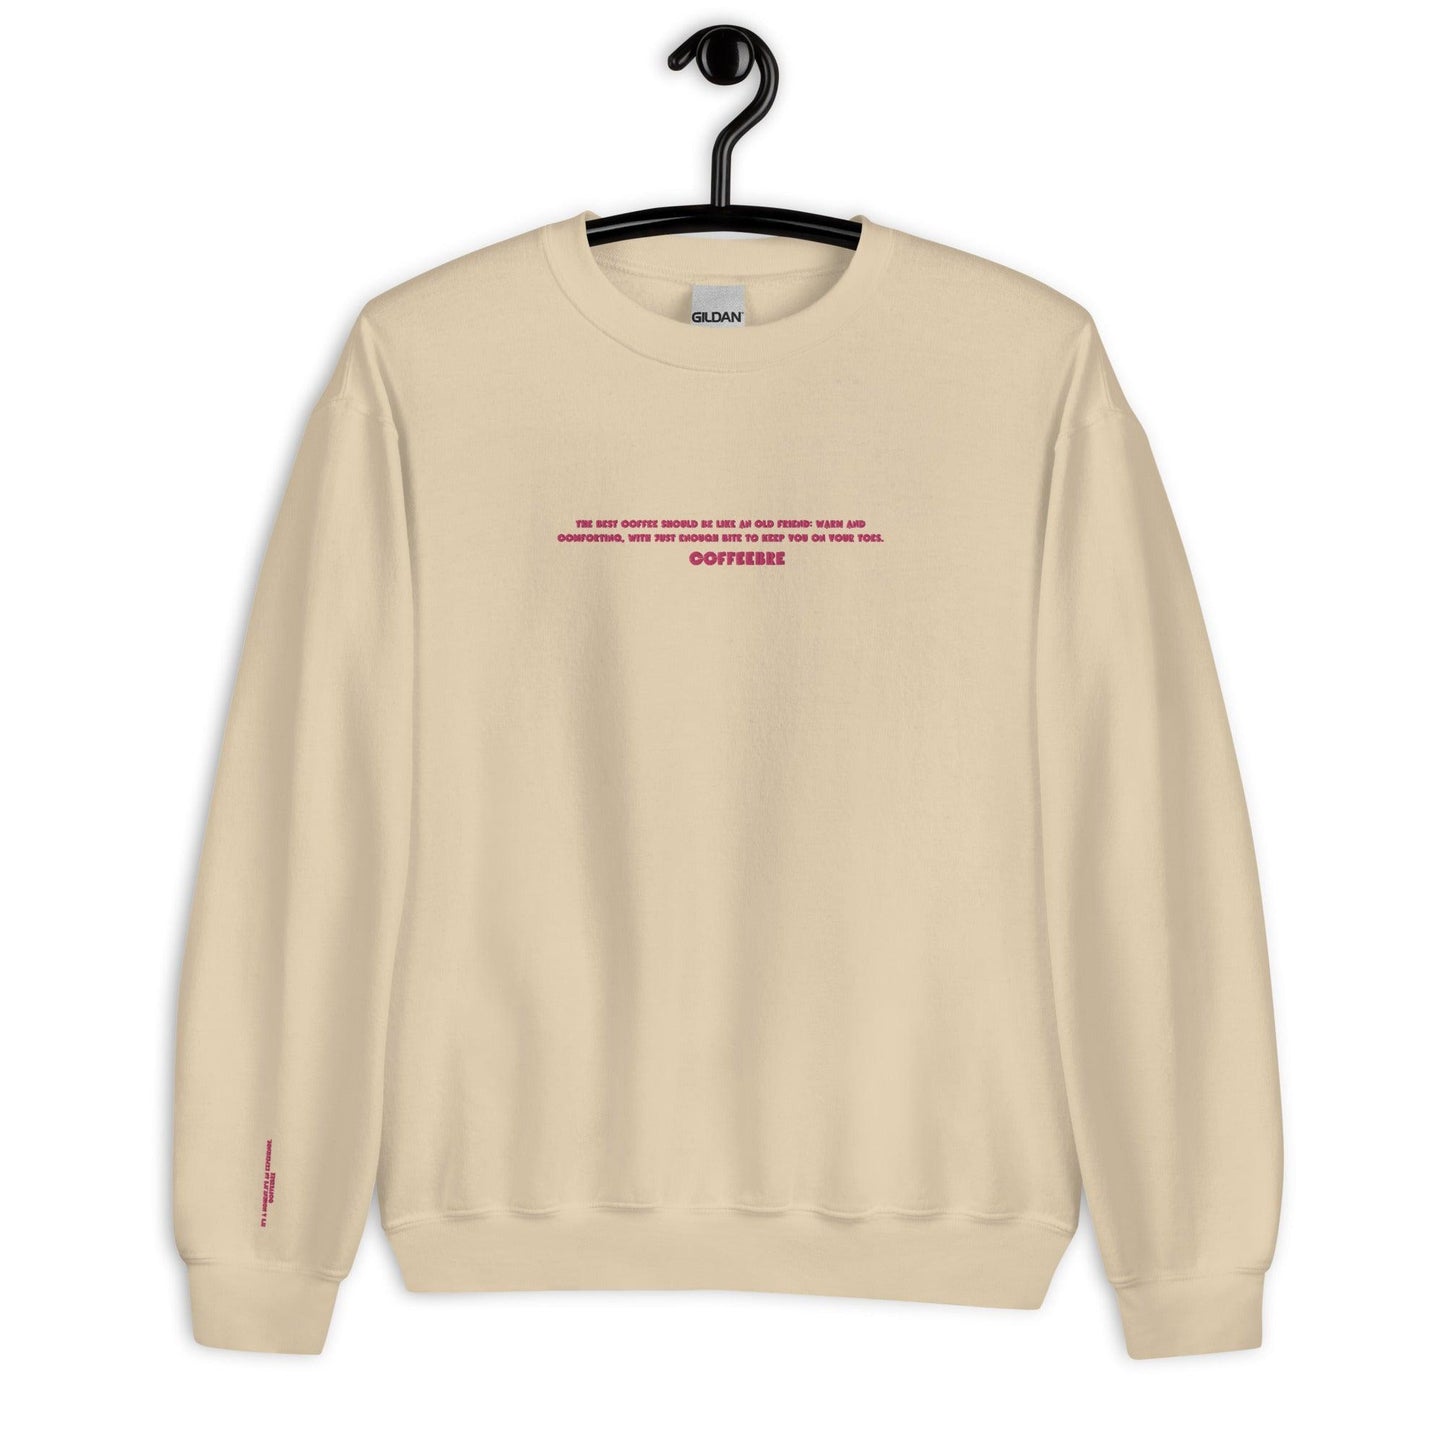 Embroidered Lifestyle Unisex Crewneck Sweatshirt - COFFEEBRE